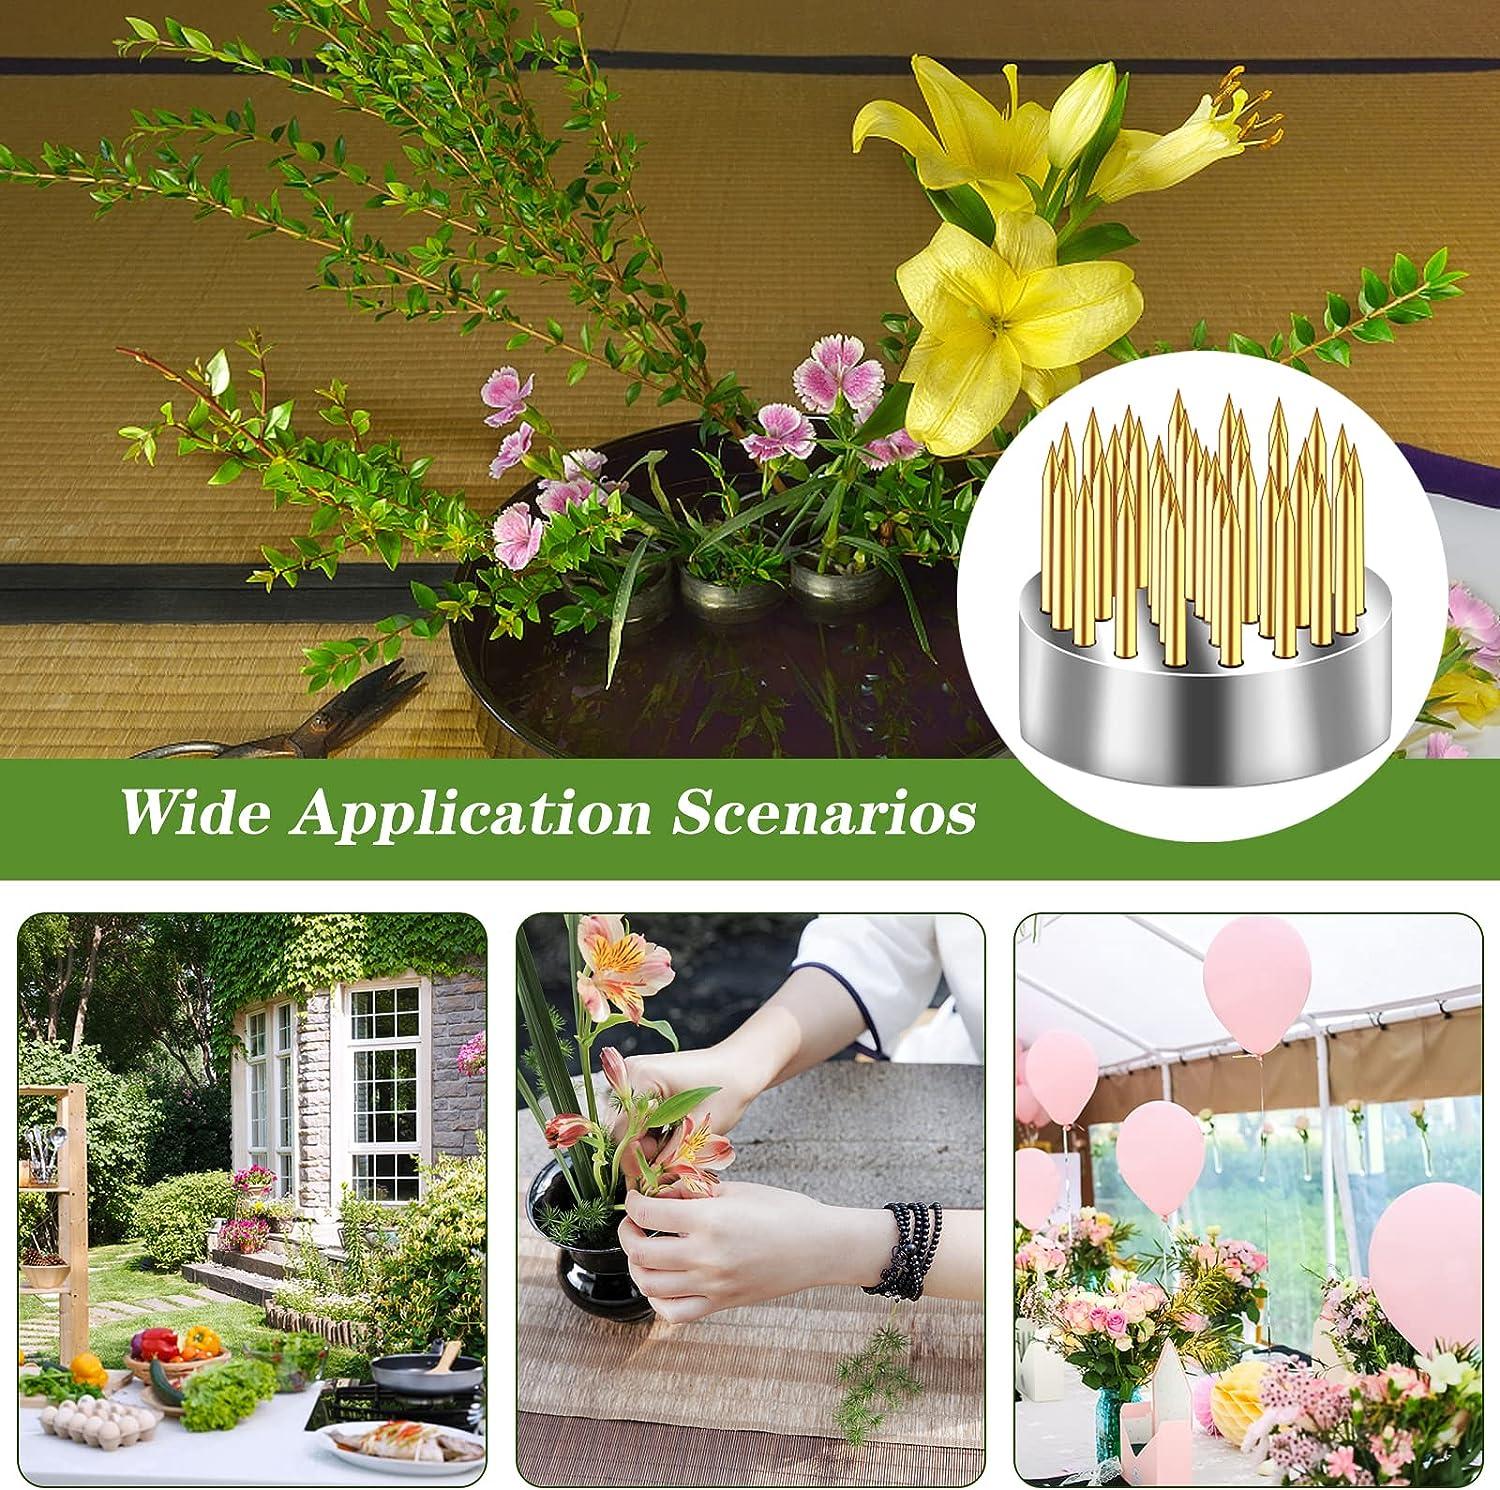 Japanese Flower Base Pin Flower Arrangements Supplies Home Supply Round  Ikebana